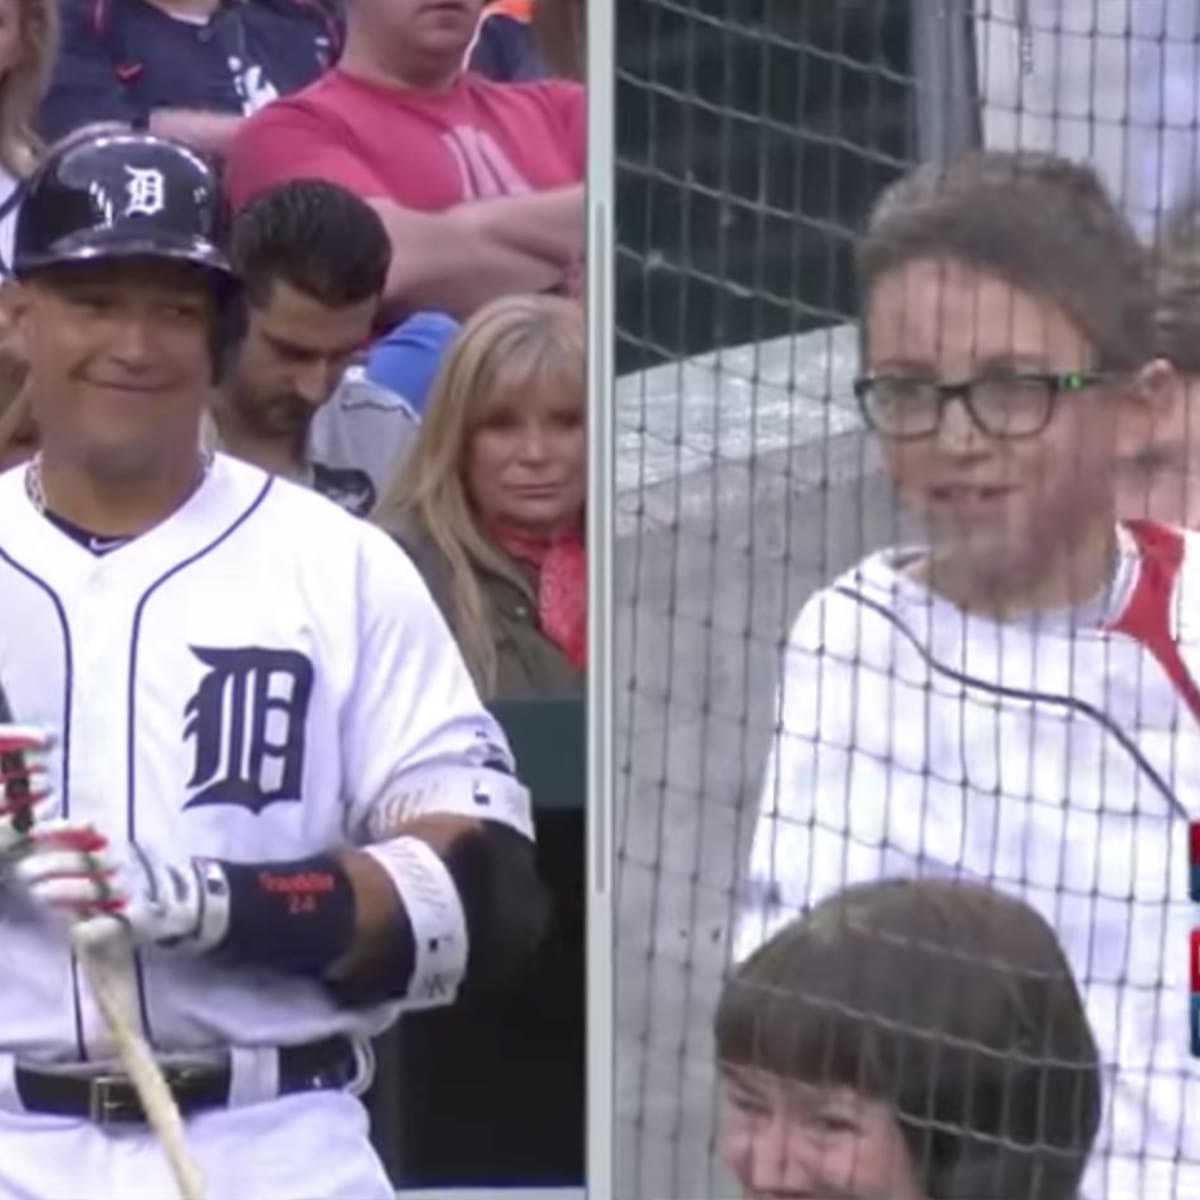 Tigers fan wears Miguel Cabrera jersey, gets bat (video) - Sports  Illustrated